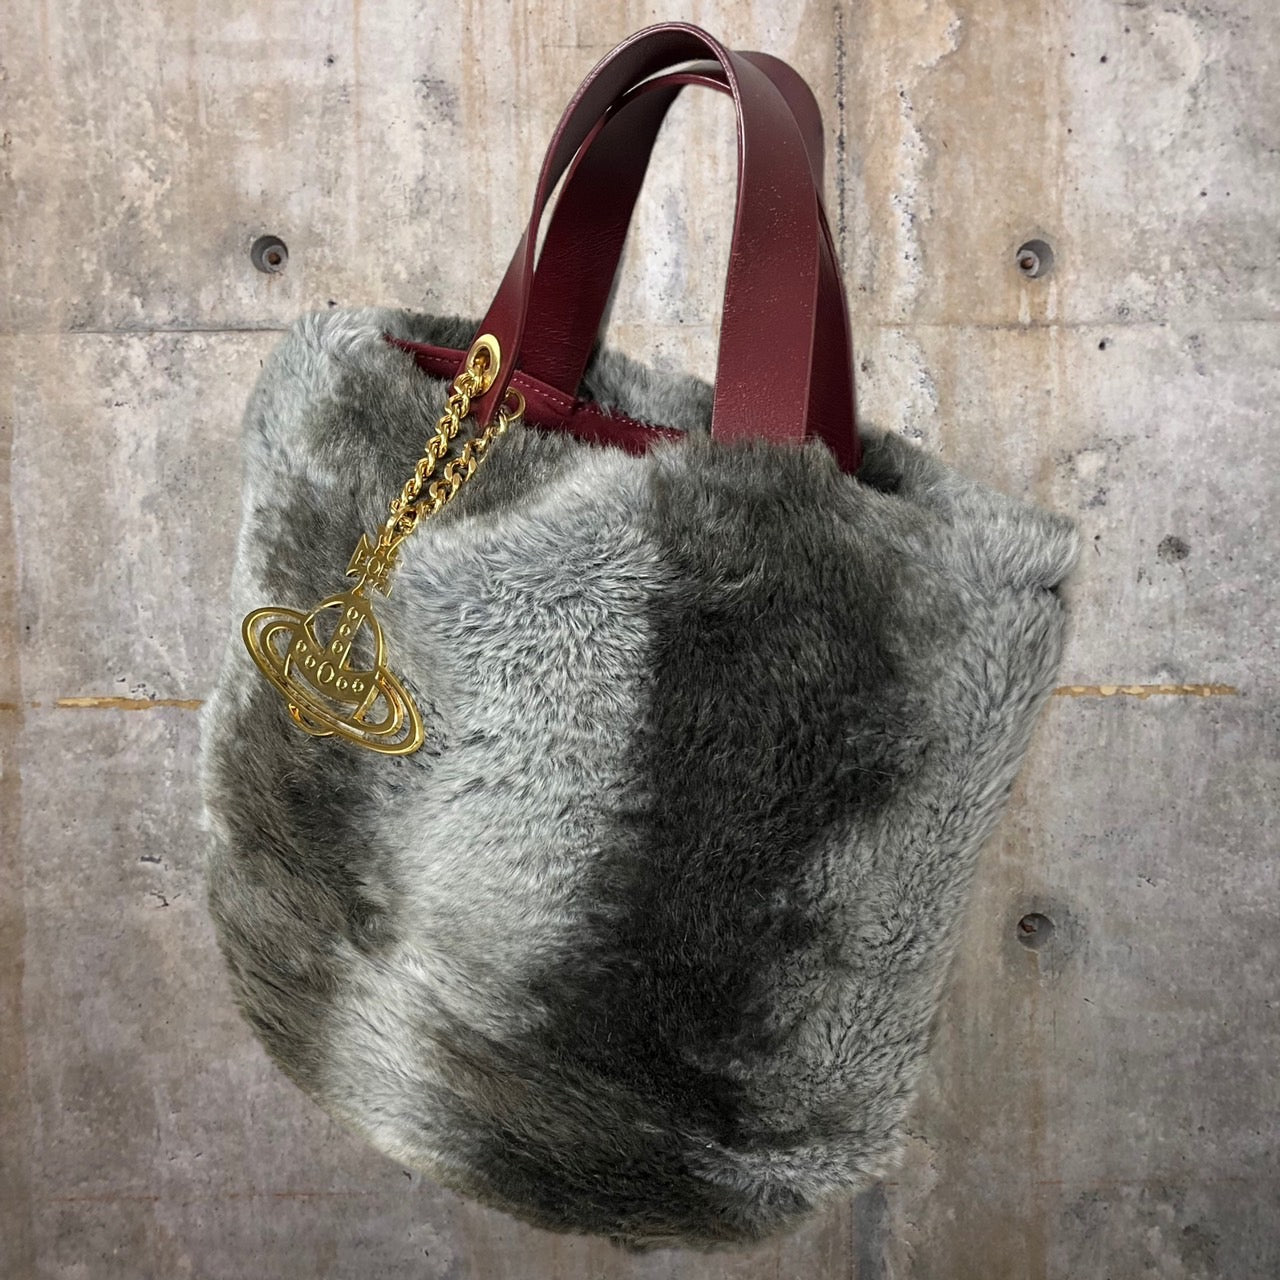 Vivienne Westwood(ヴィヴィアンウエストウッド) orb charm eco fur bag/オーブチャームエコファーバッグ/トートバッグ グレー